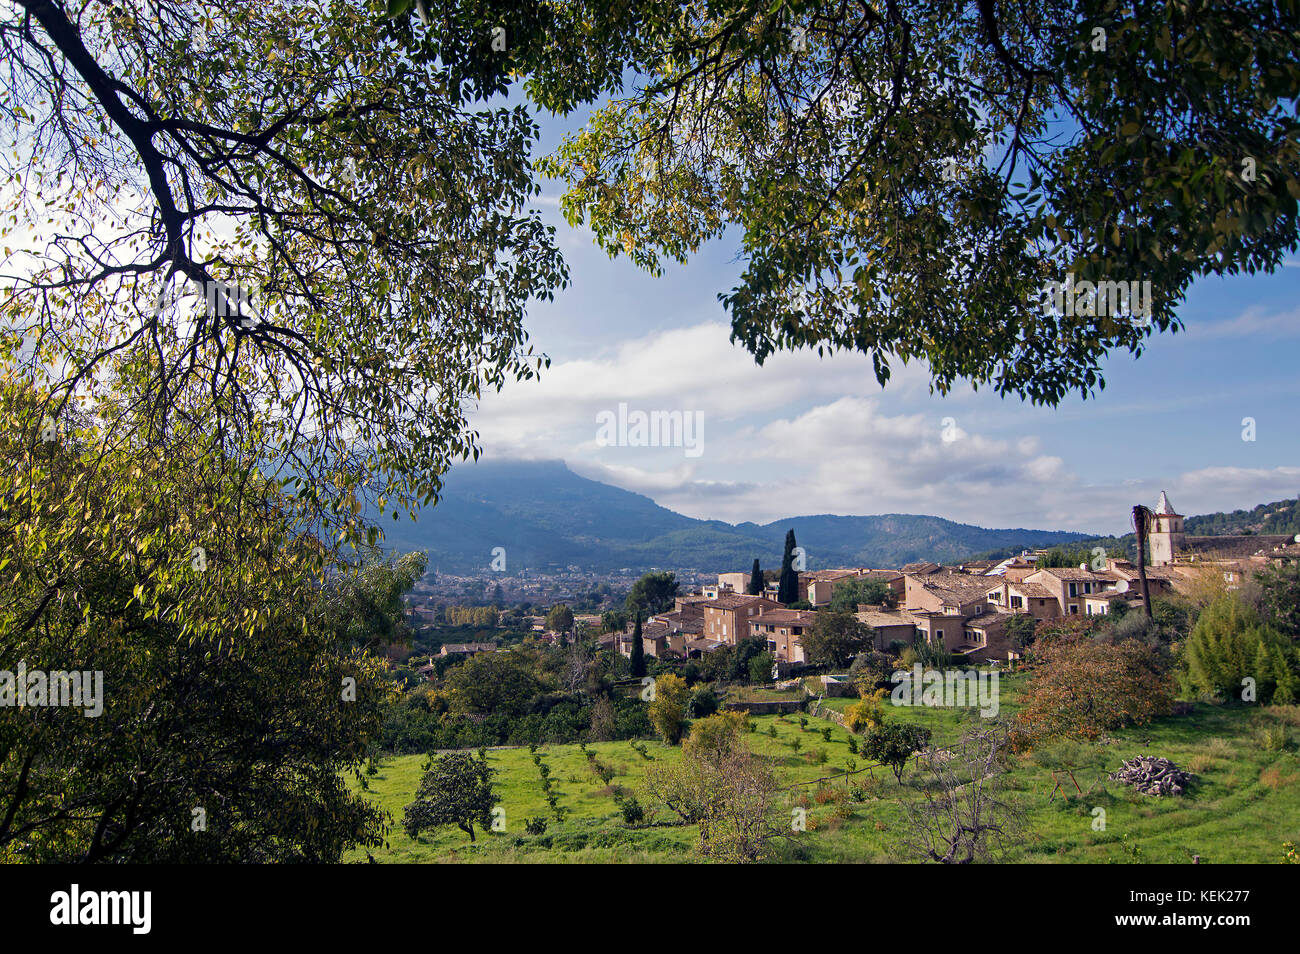 Biniaraix, beautiful mountain village in Mallorca. A wonderful part of the Traumuntana mountain range Stock Photo